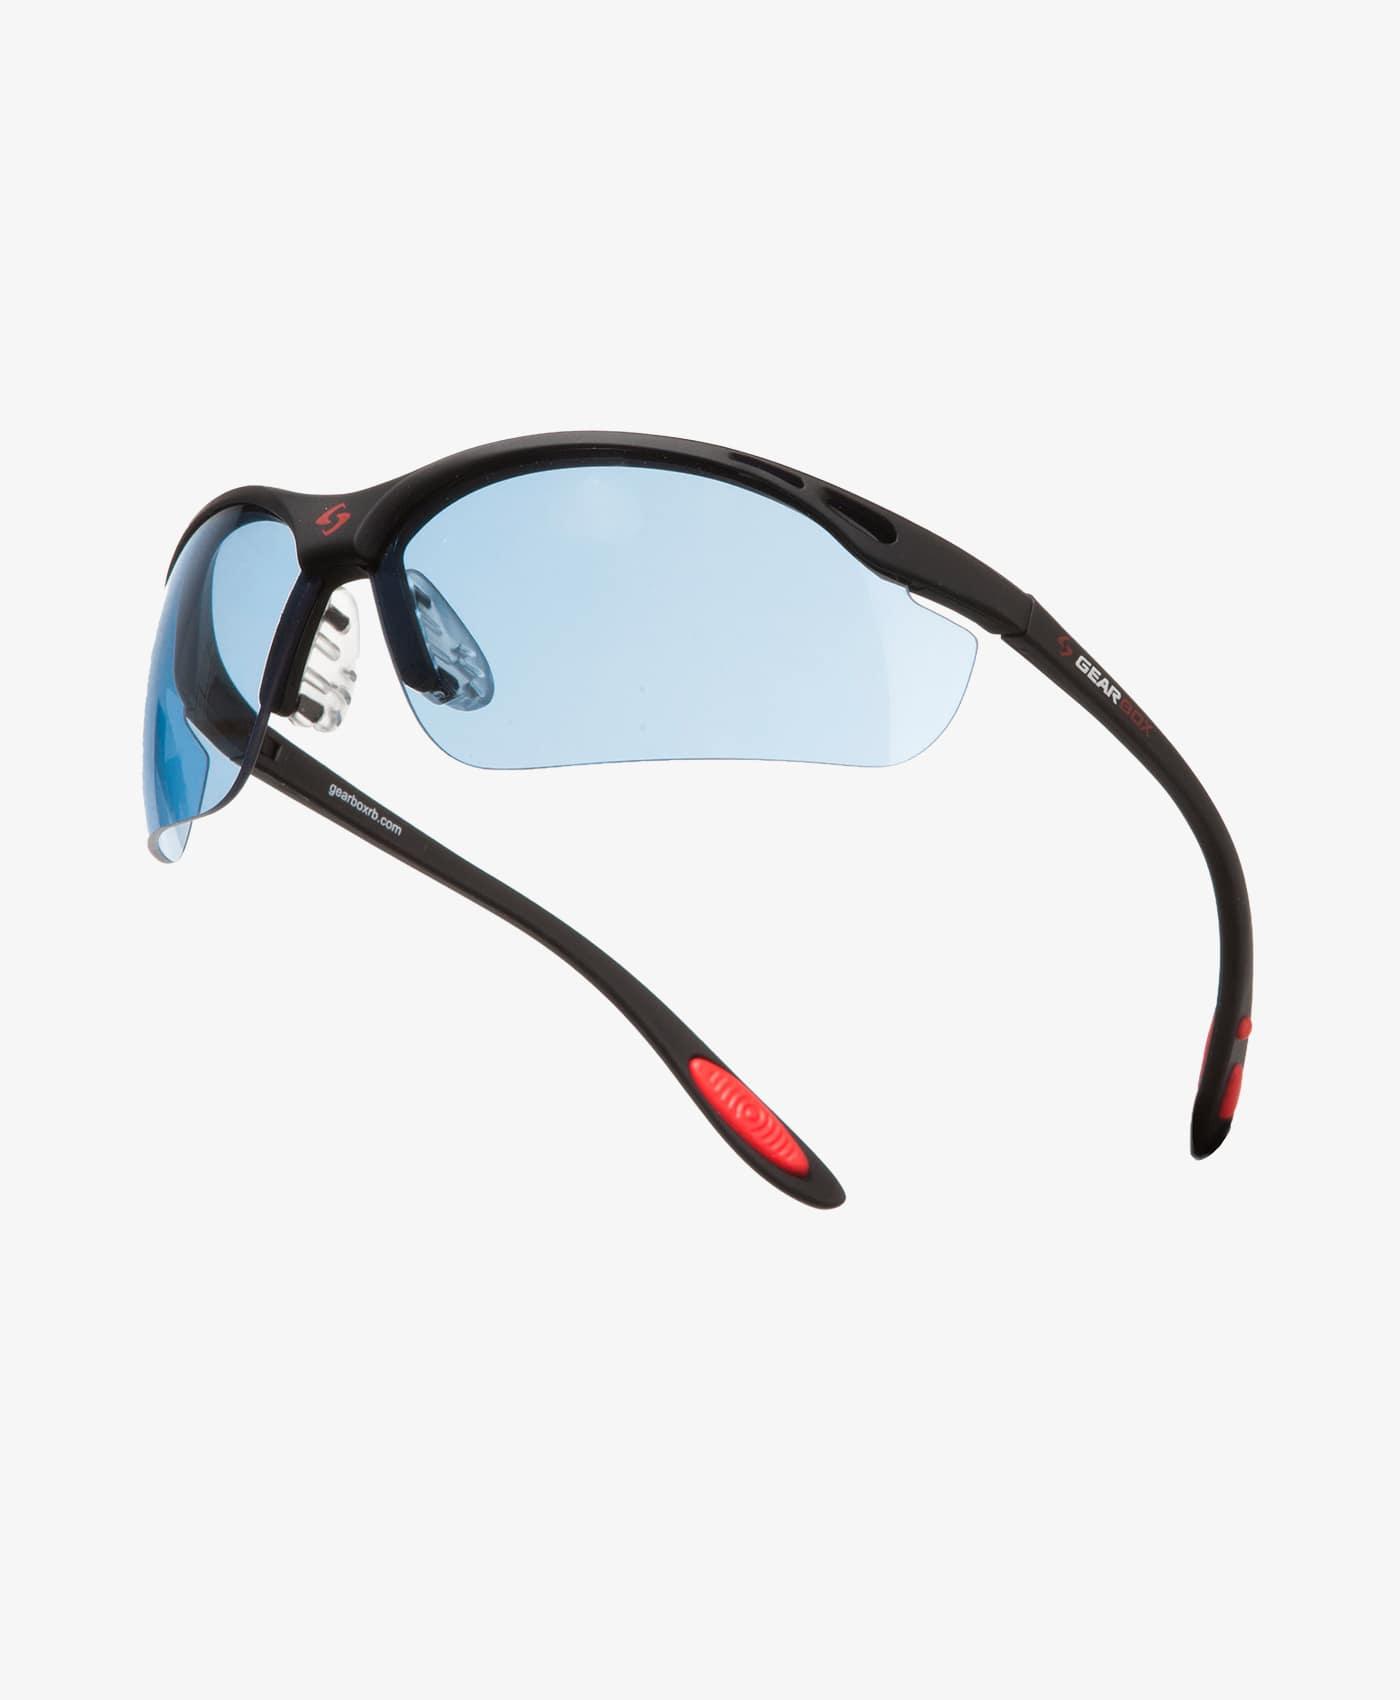 Gearbox Vision Eyewear - Pickleball Paddle Shop